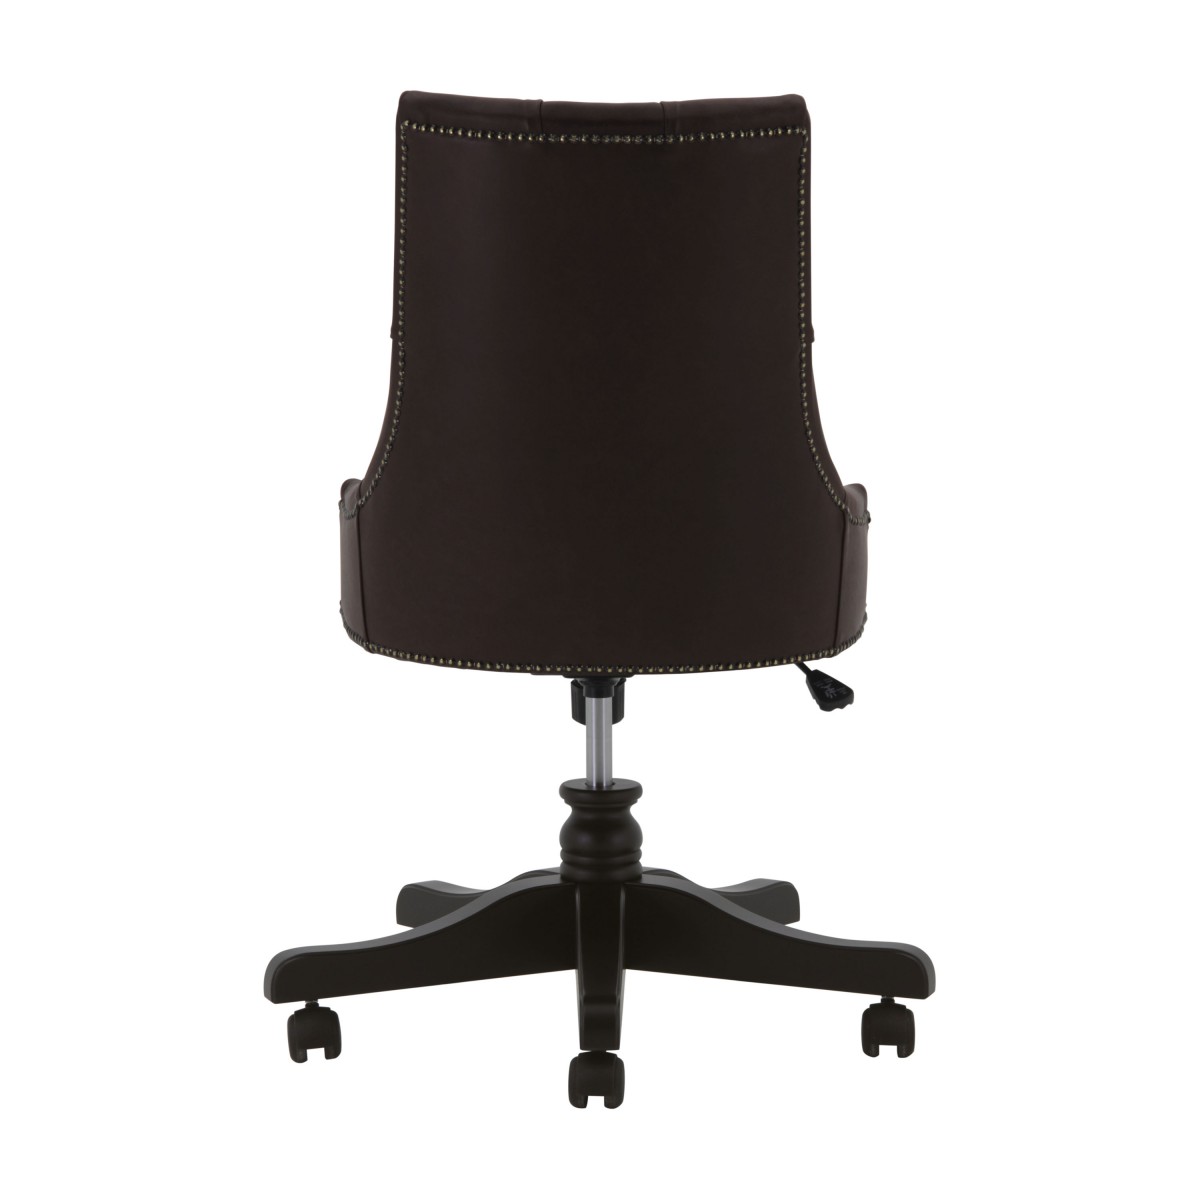 leather swivel chair edward 3 3415